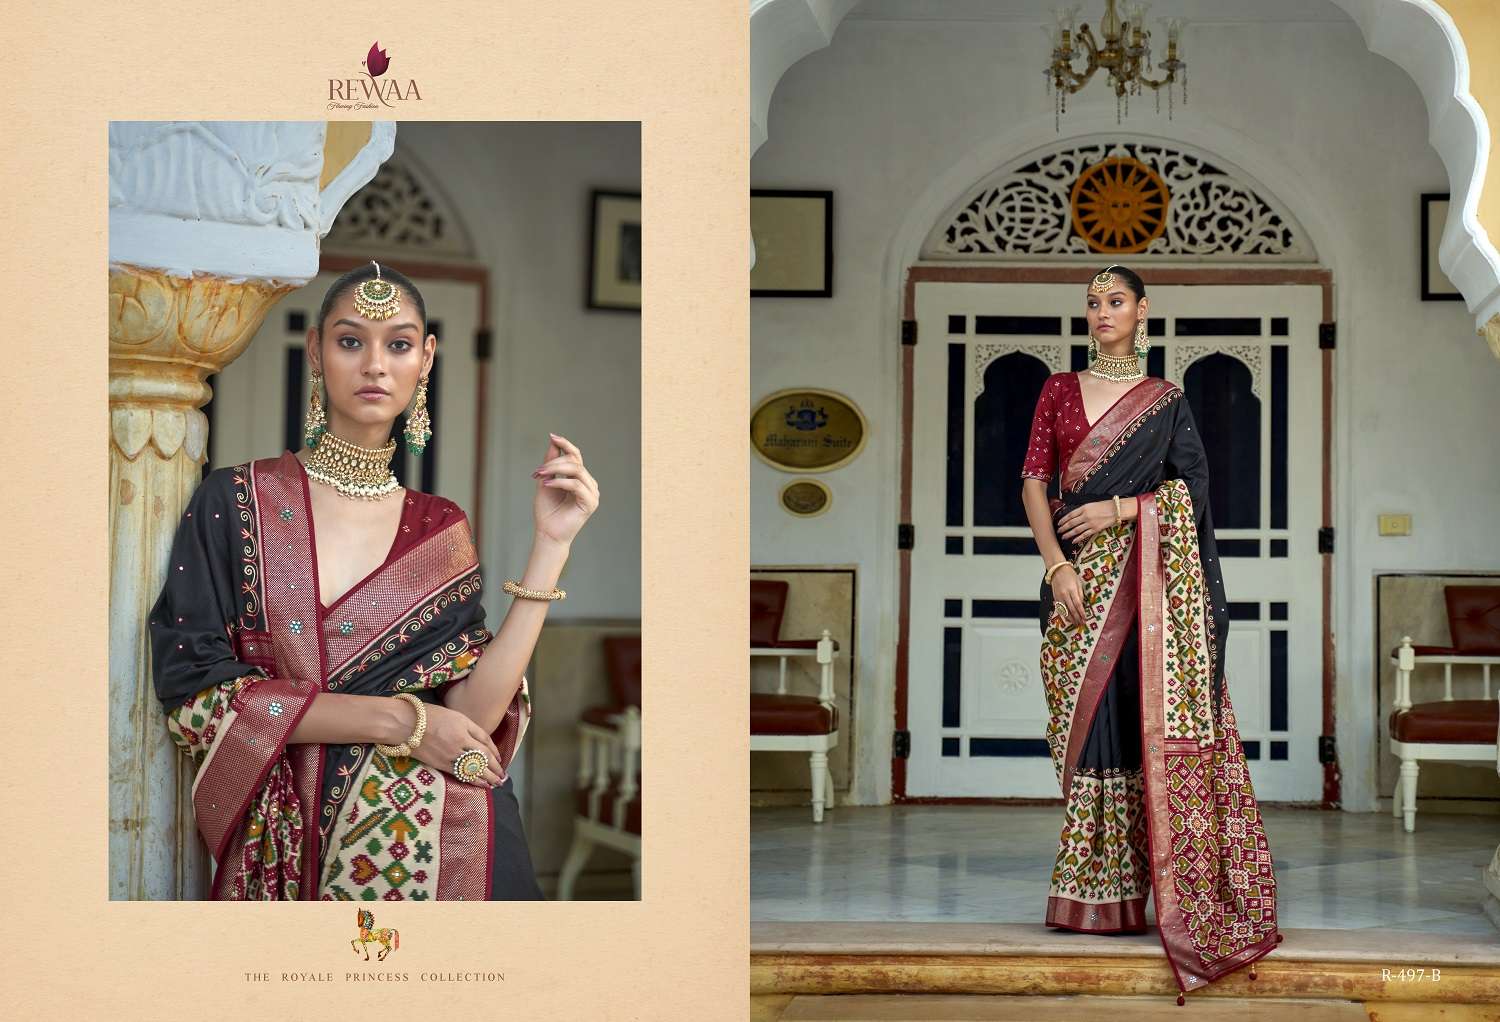 Rewaa Aari Silk saree Wholesale catalog